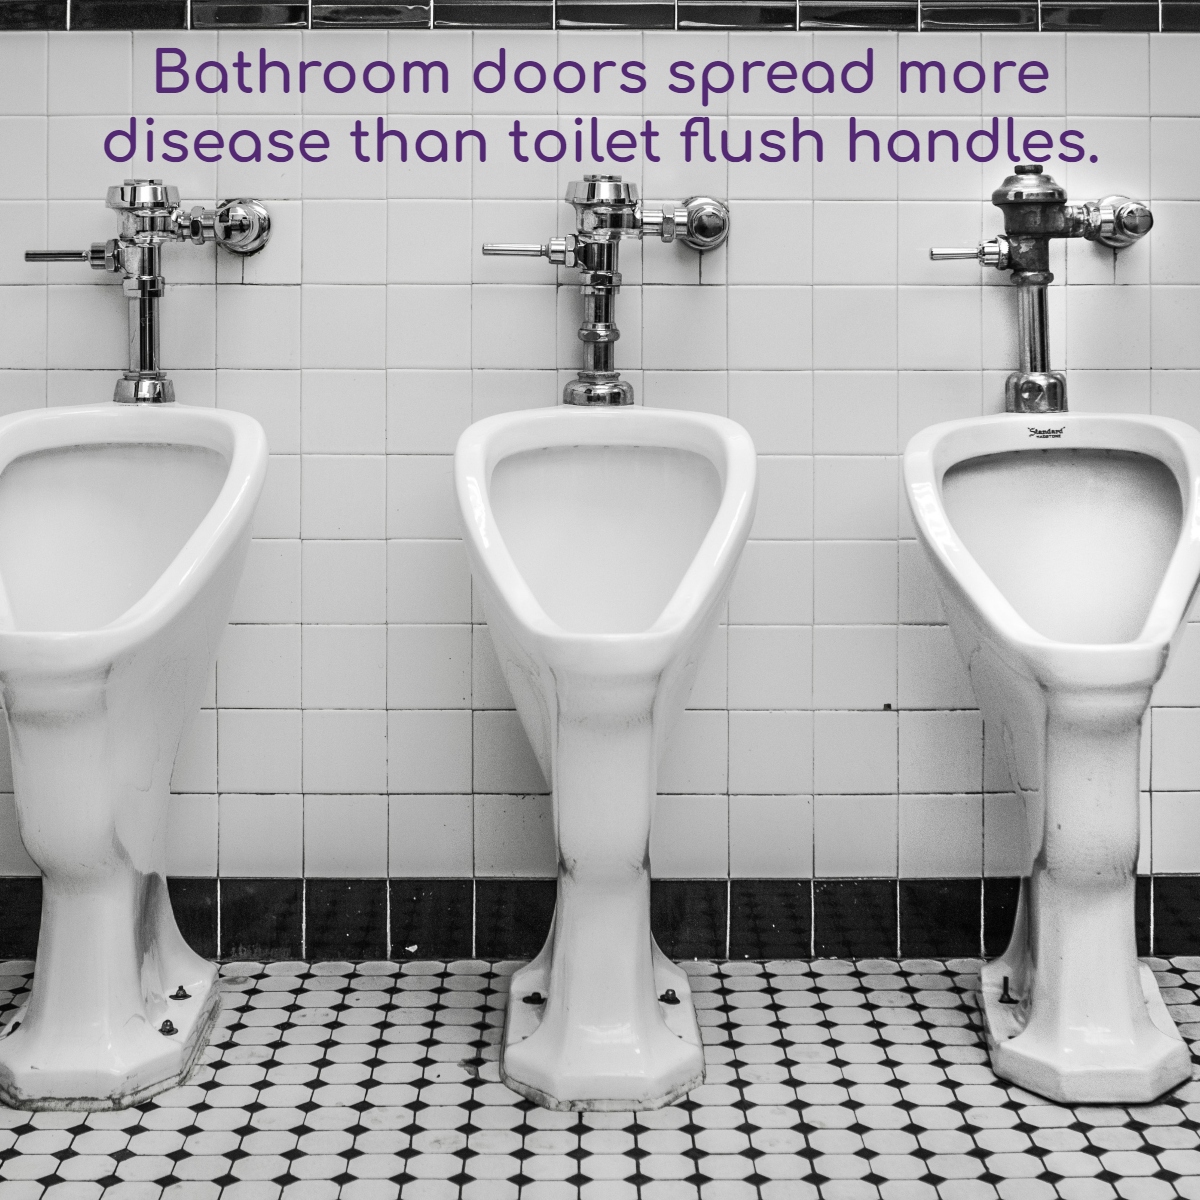 bathroom doors spread disease